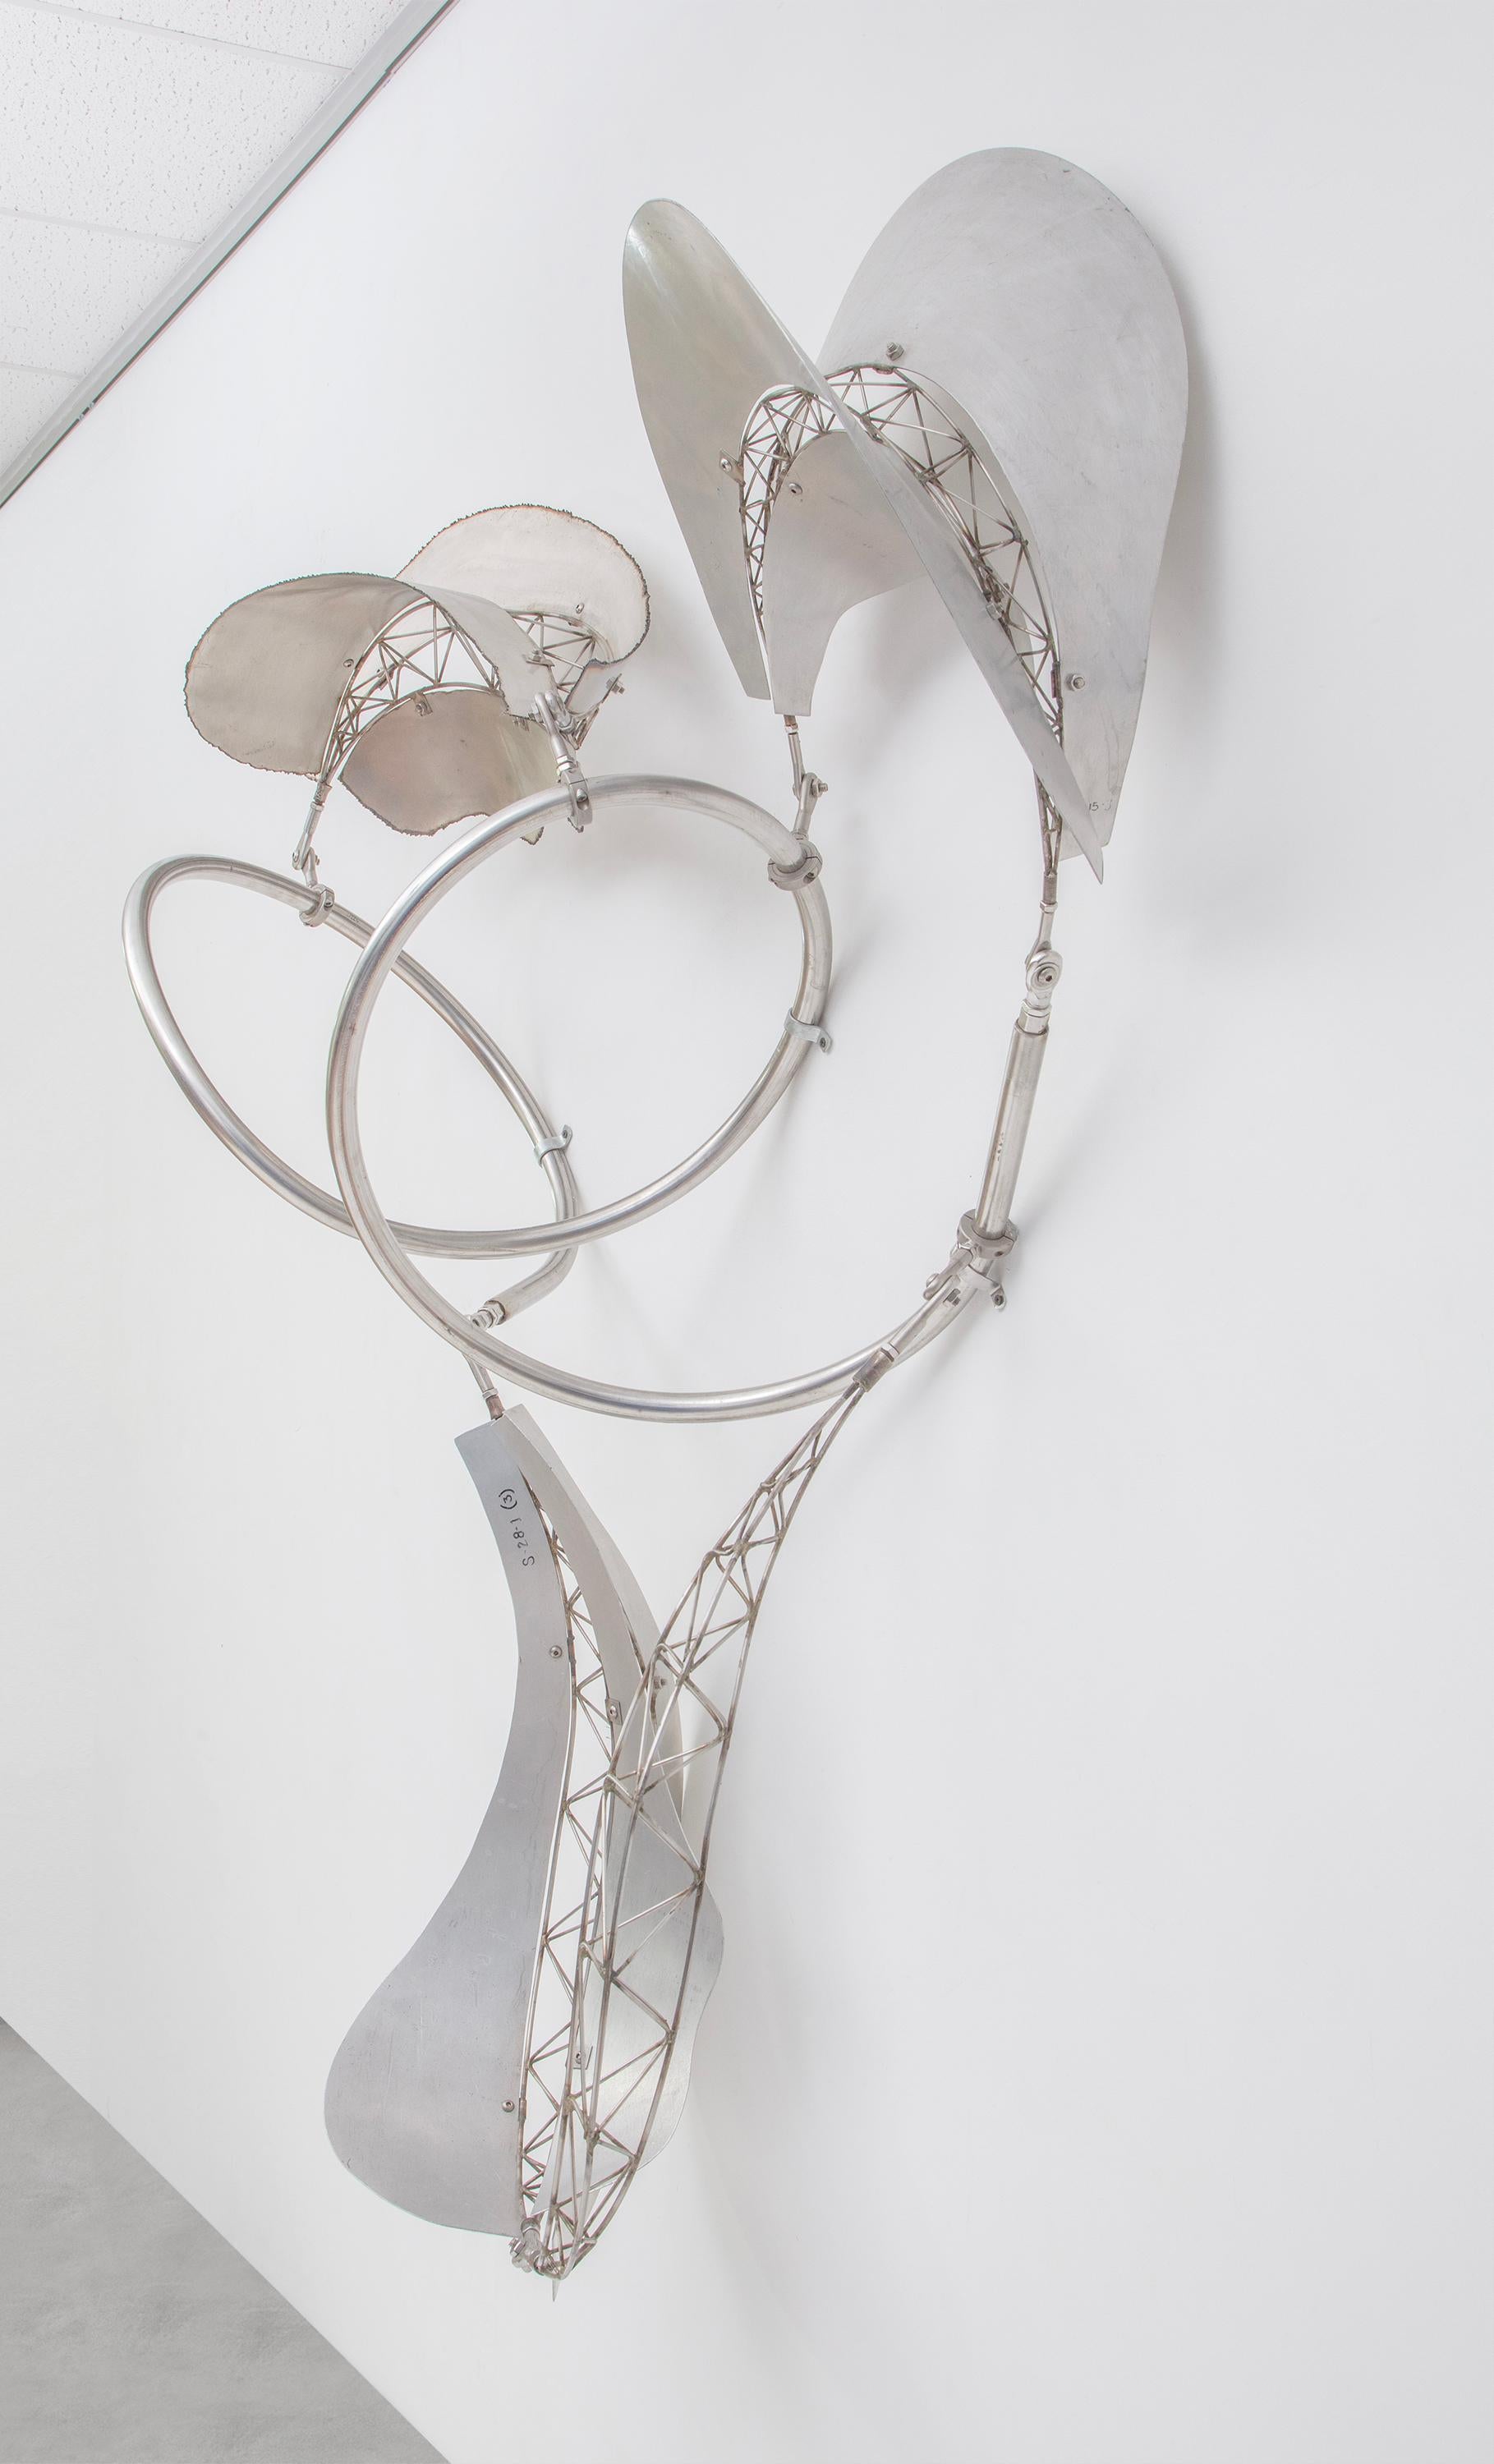 Dadap - Sculpture de Frank Stella